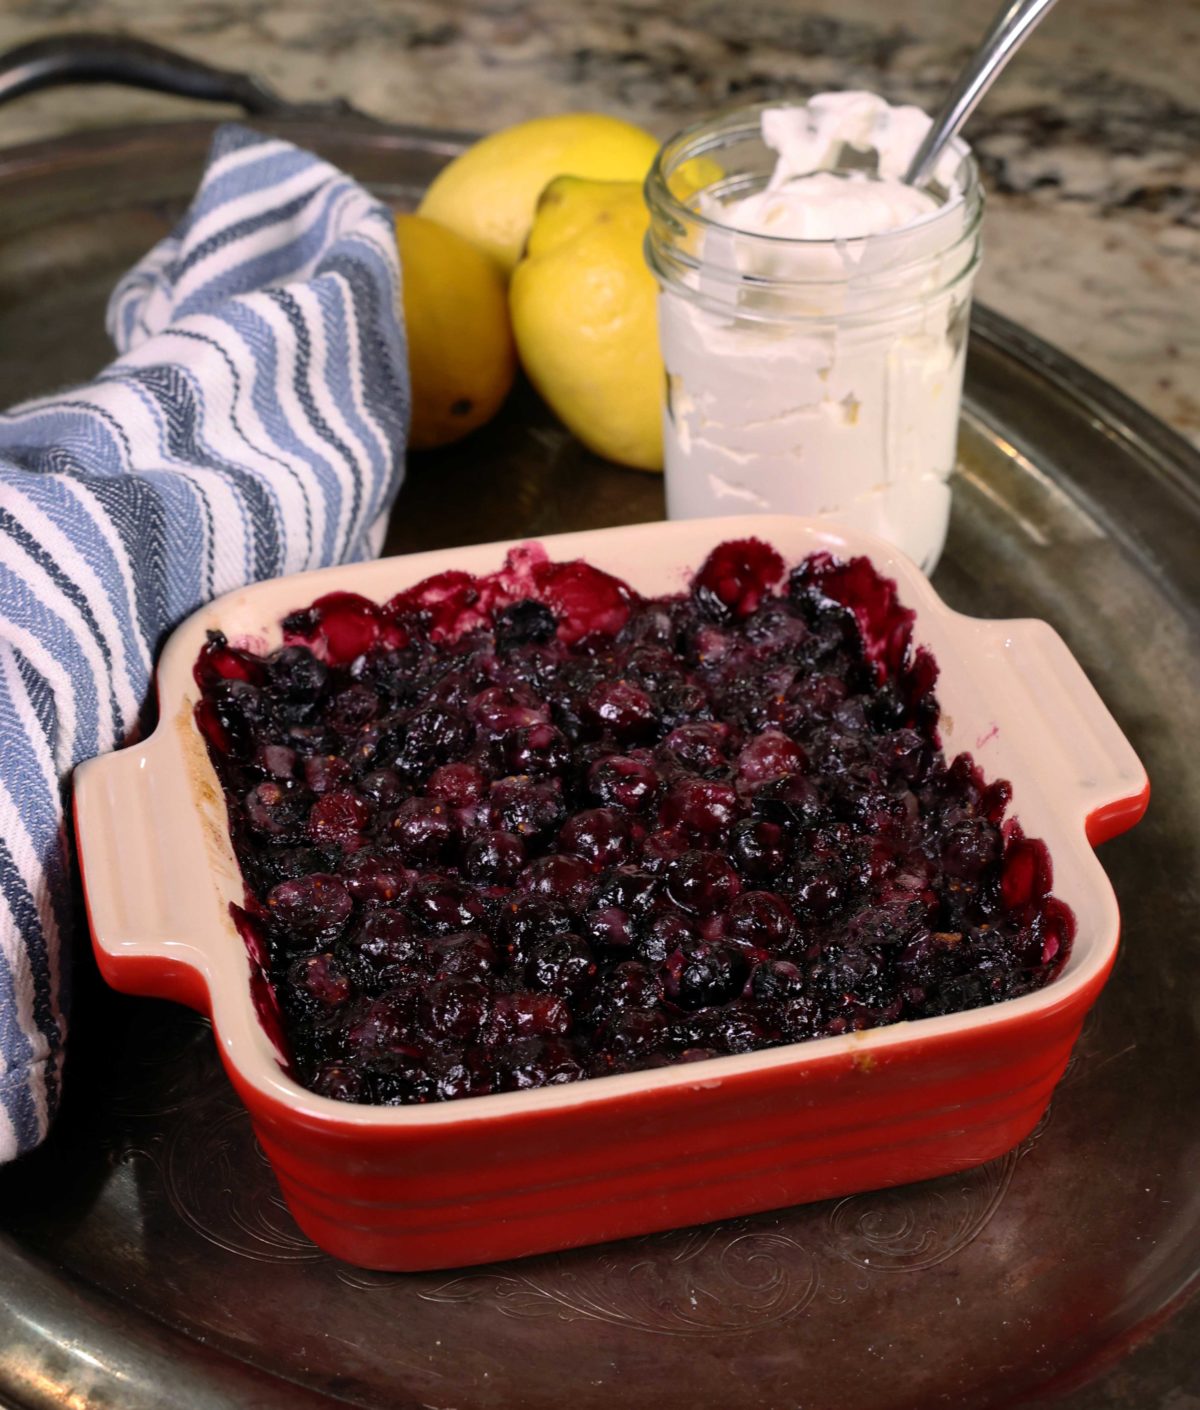 https://onedishkitchen.com/wp-content/uploads/2021/04/blueberry-pie-one-dish-kitchen-2-1200x1410.jpg